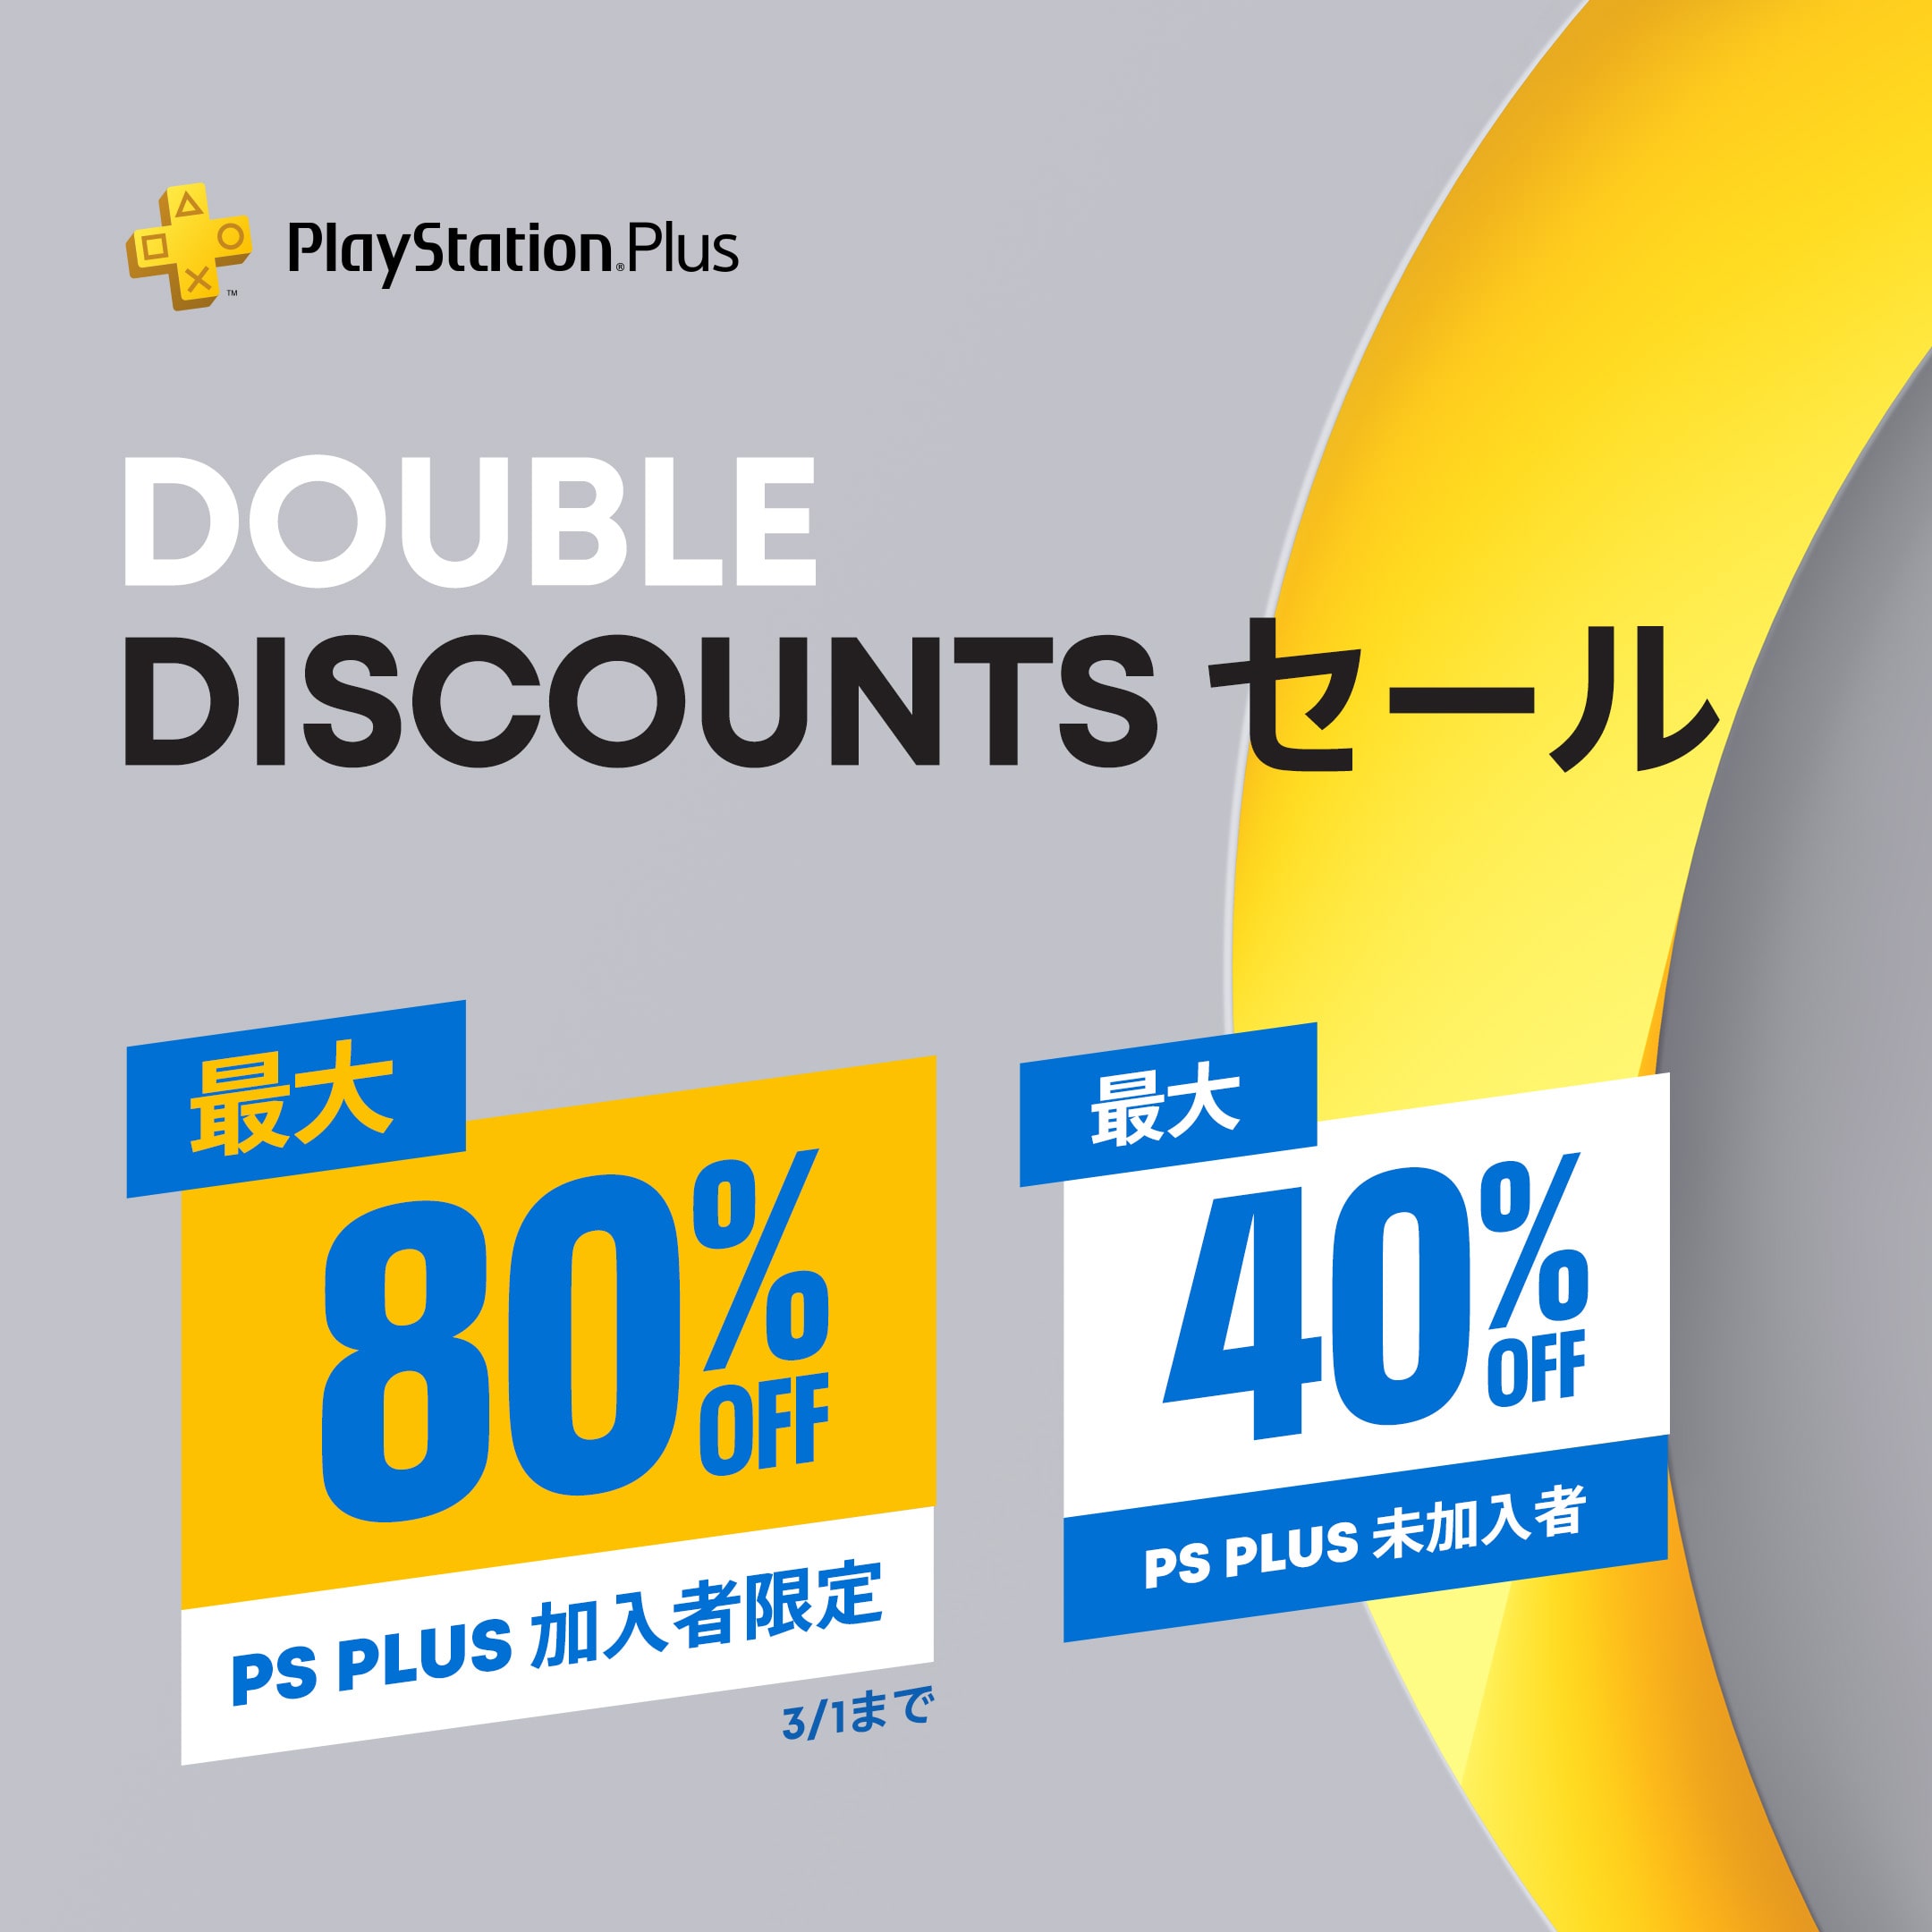 PS Store PS Plus Double Discounts Feb 2023のセール対象ゲームソフト一覧 ゲームセールJP